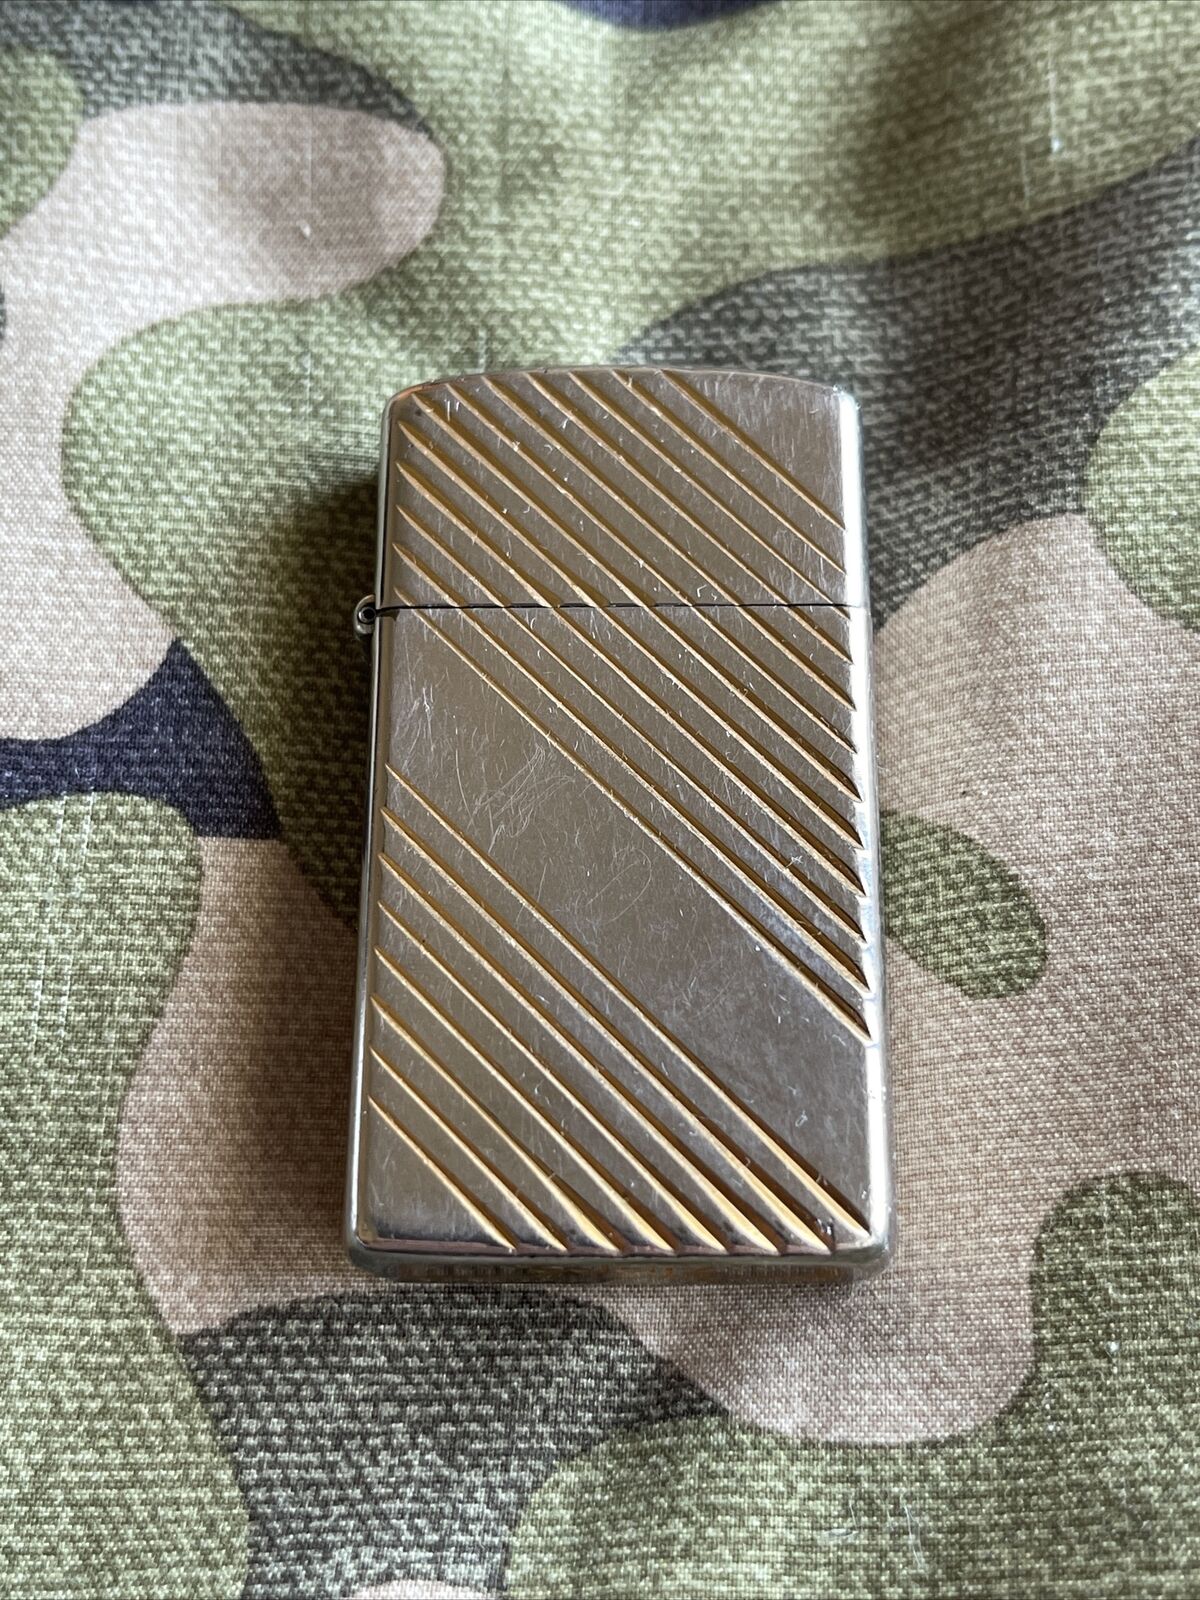 1984 Vintage Zippo Slim Lighter - Gold Plated - Bright Cut Diagonal Lines